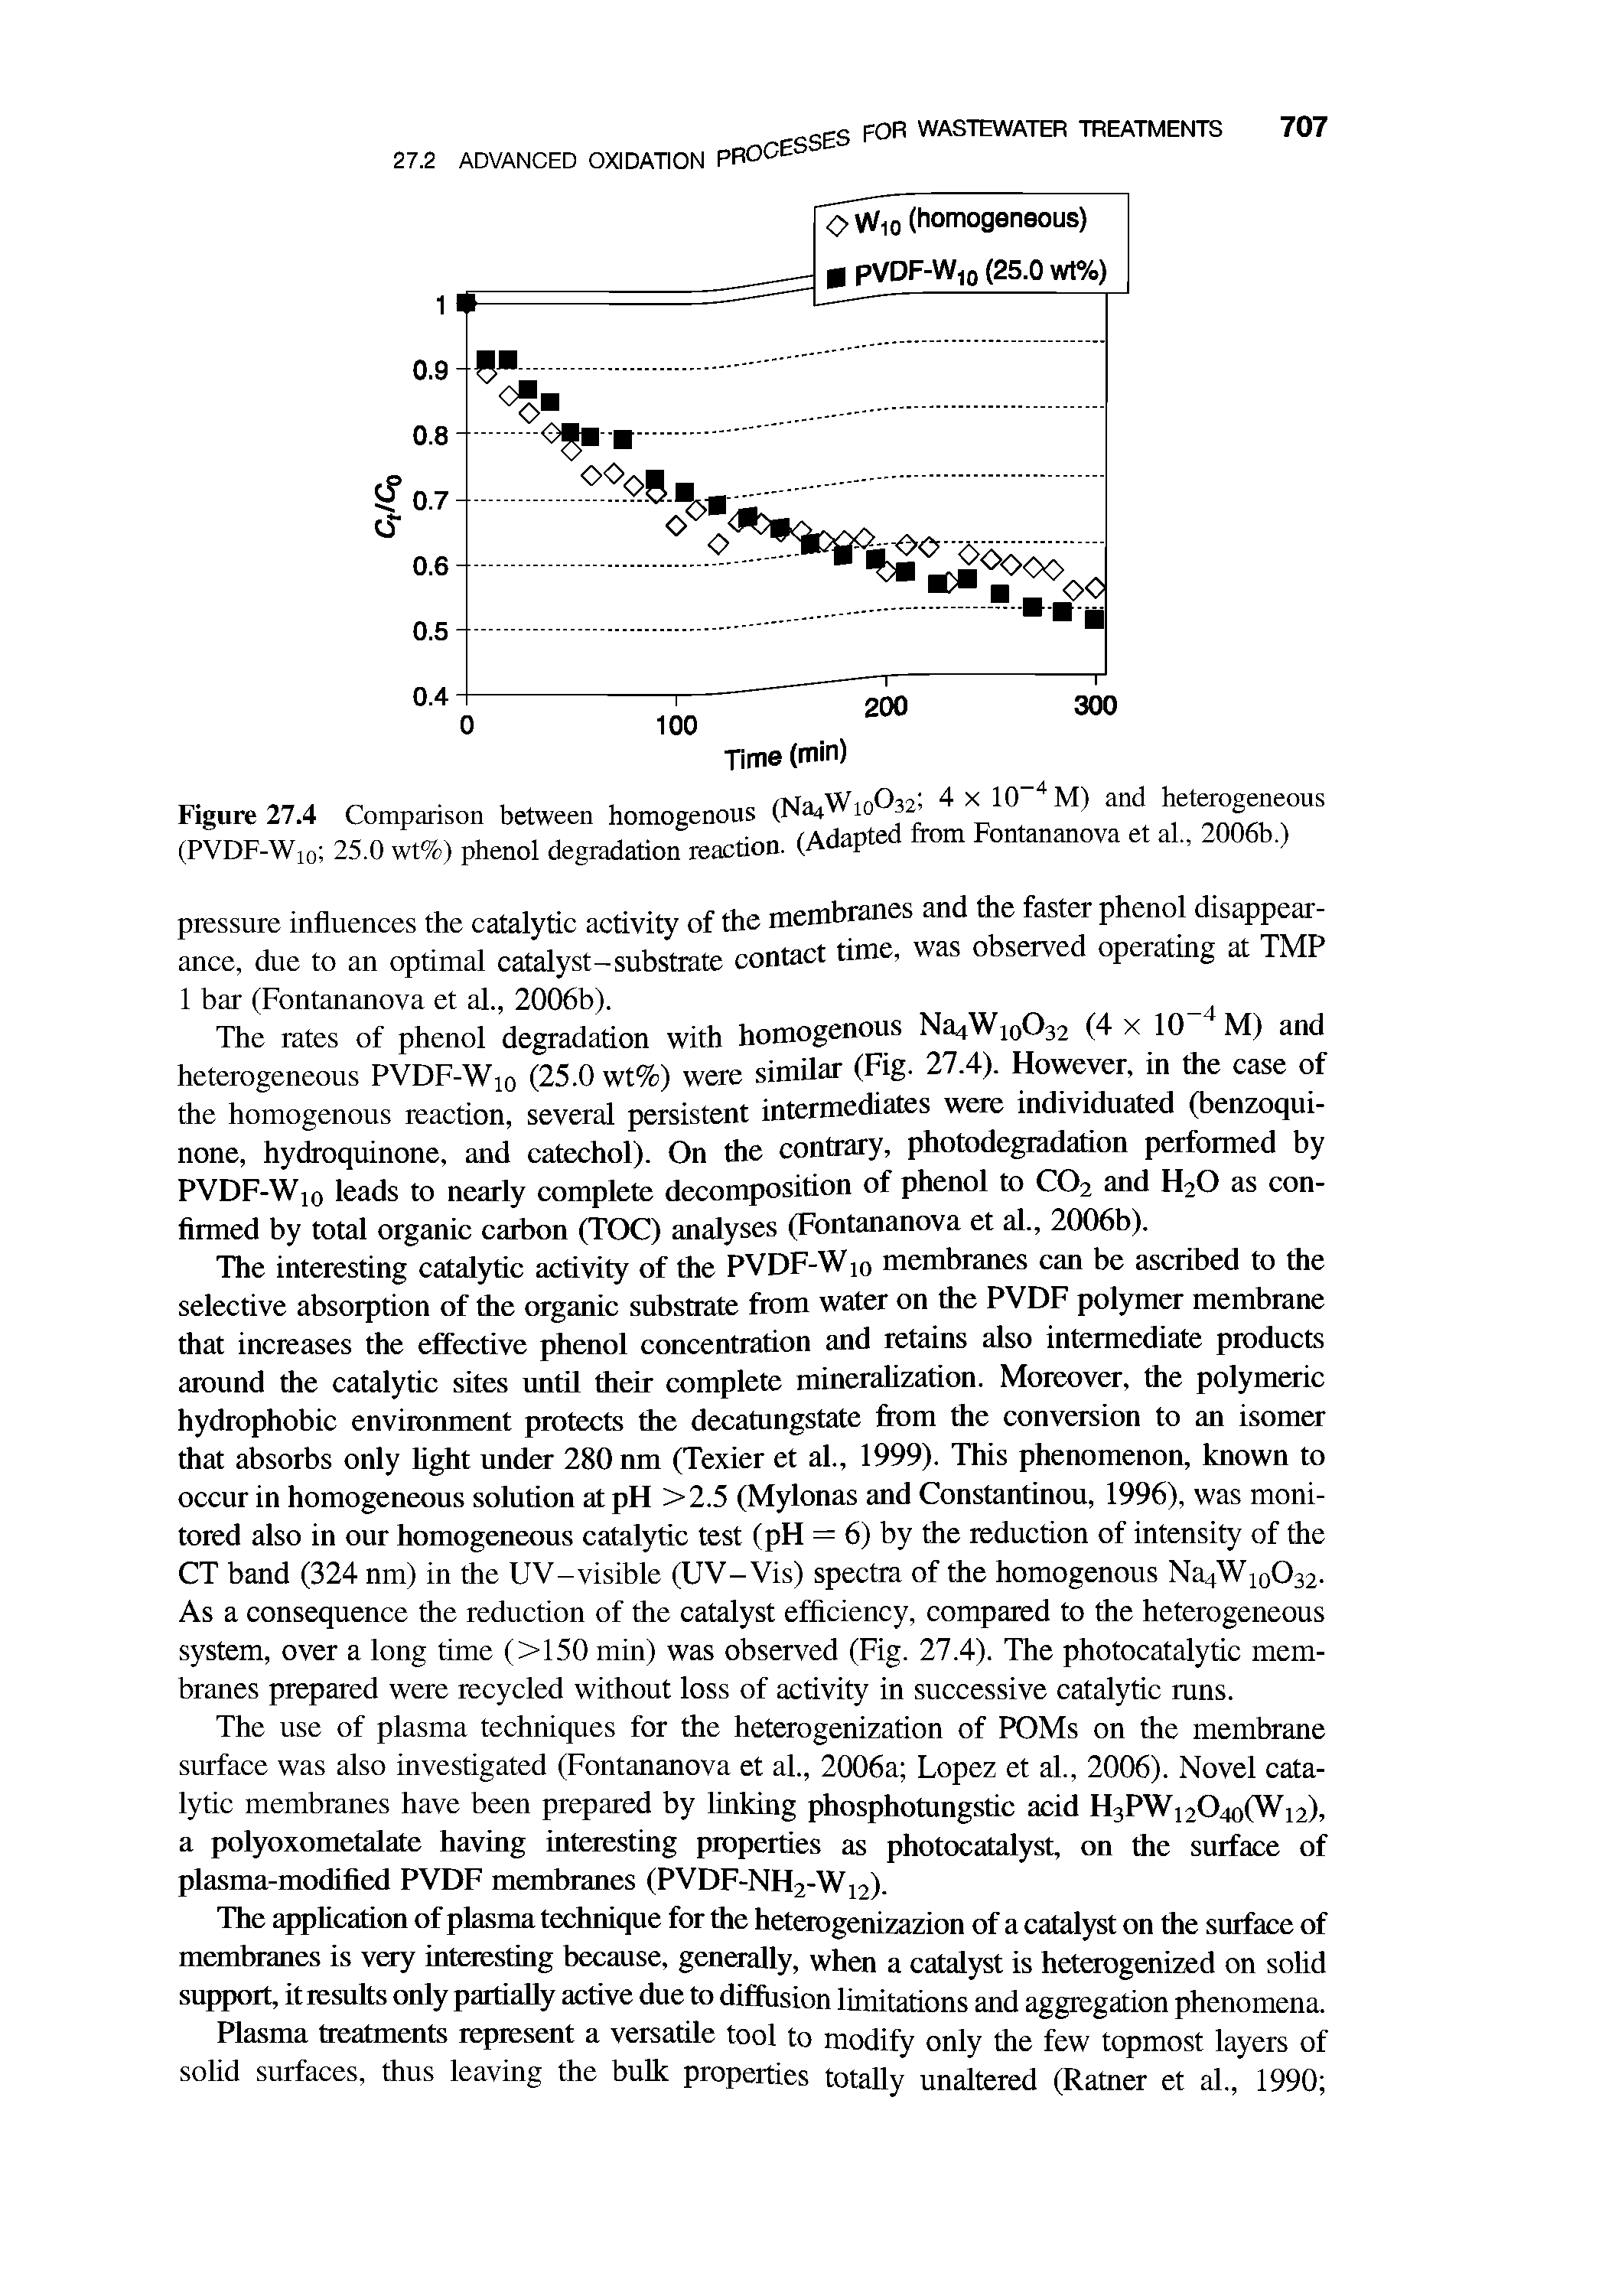 Figure 27.4 Comparison between homogenous (Na4Wio032 4 x 10 M) and heterogeneous (PVDF-Wio 25.0 wt%) phenol degradation reaction. (Adapted from Fontananova et al., 2006b.)...